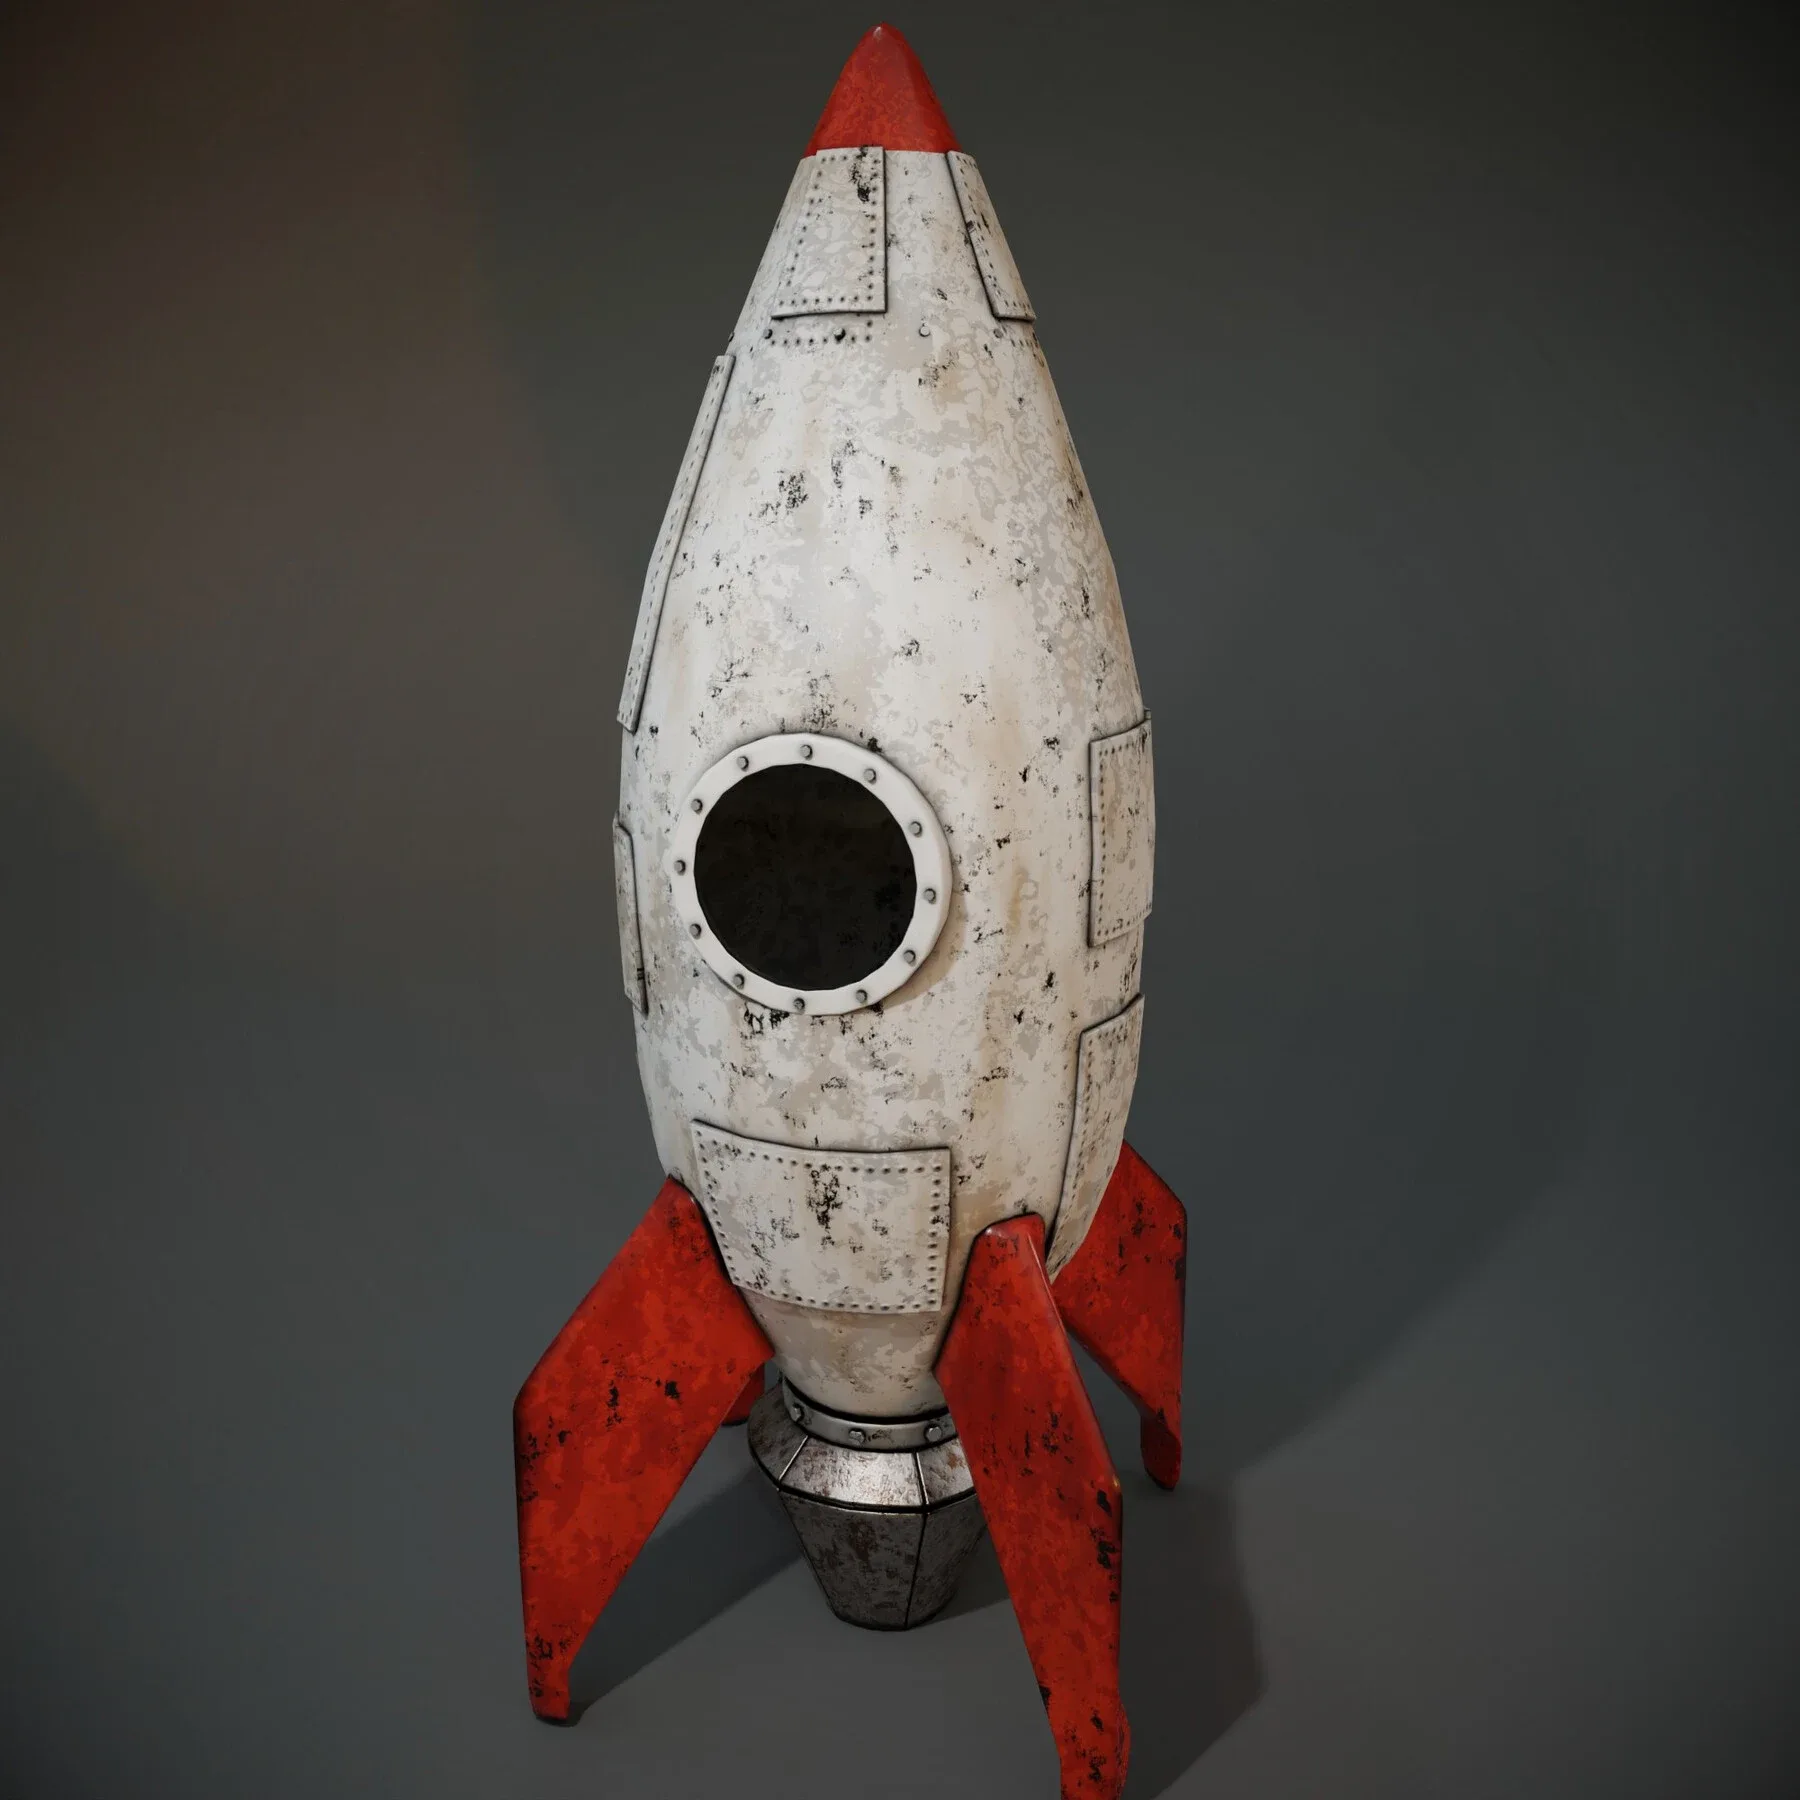 stylized rocket asset